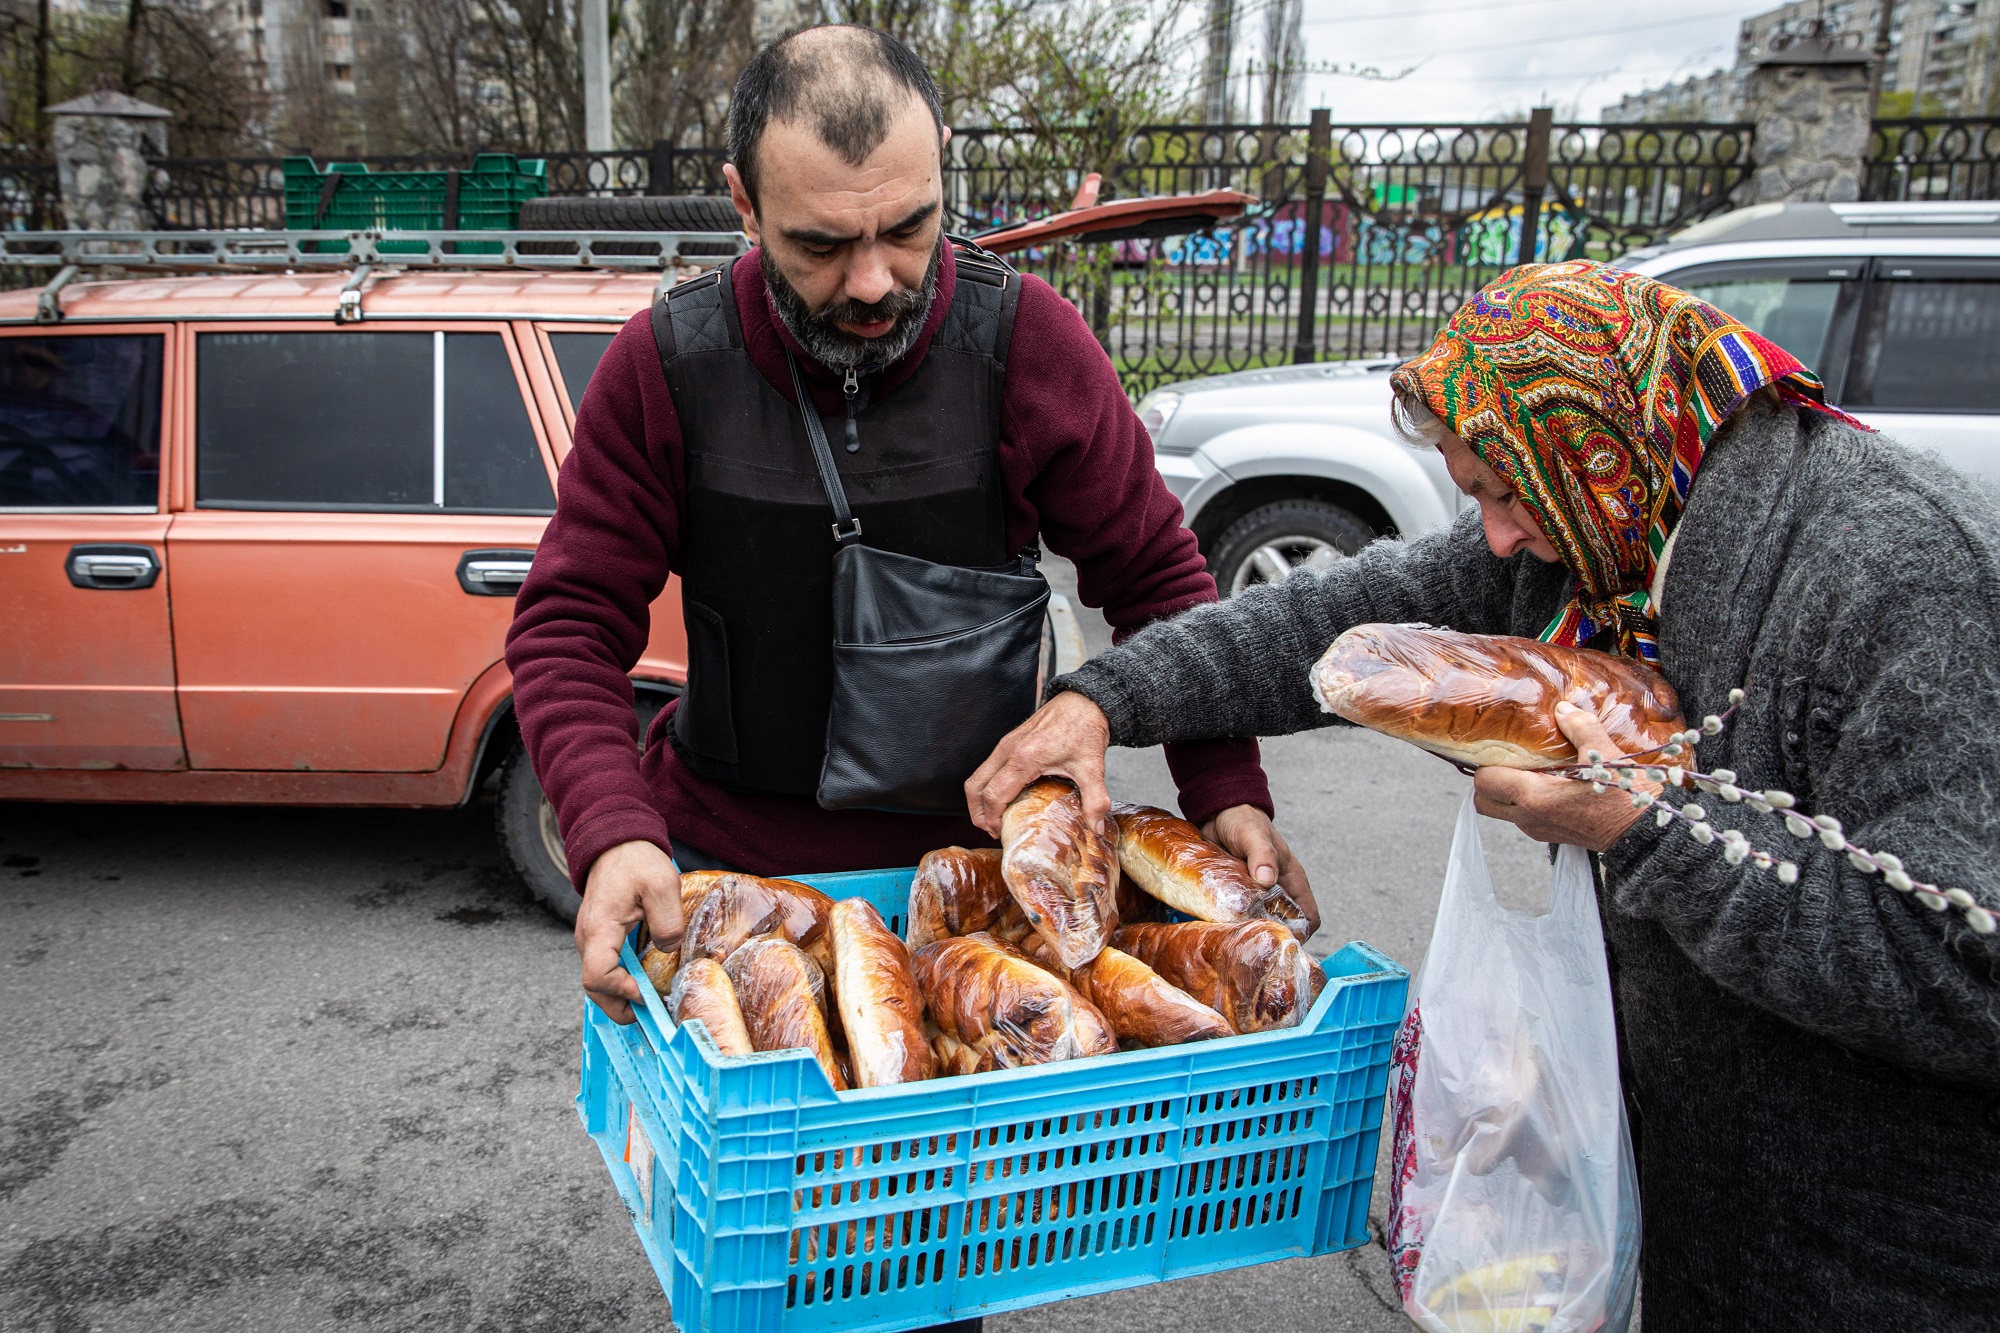 KHARKIV, UKRAINE - A volunteer distributes bread for the elderly in the northeast of Kharkiv, Ukraine.